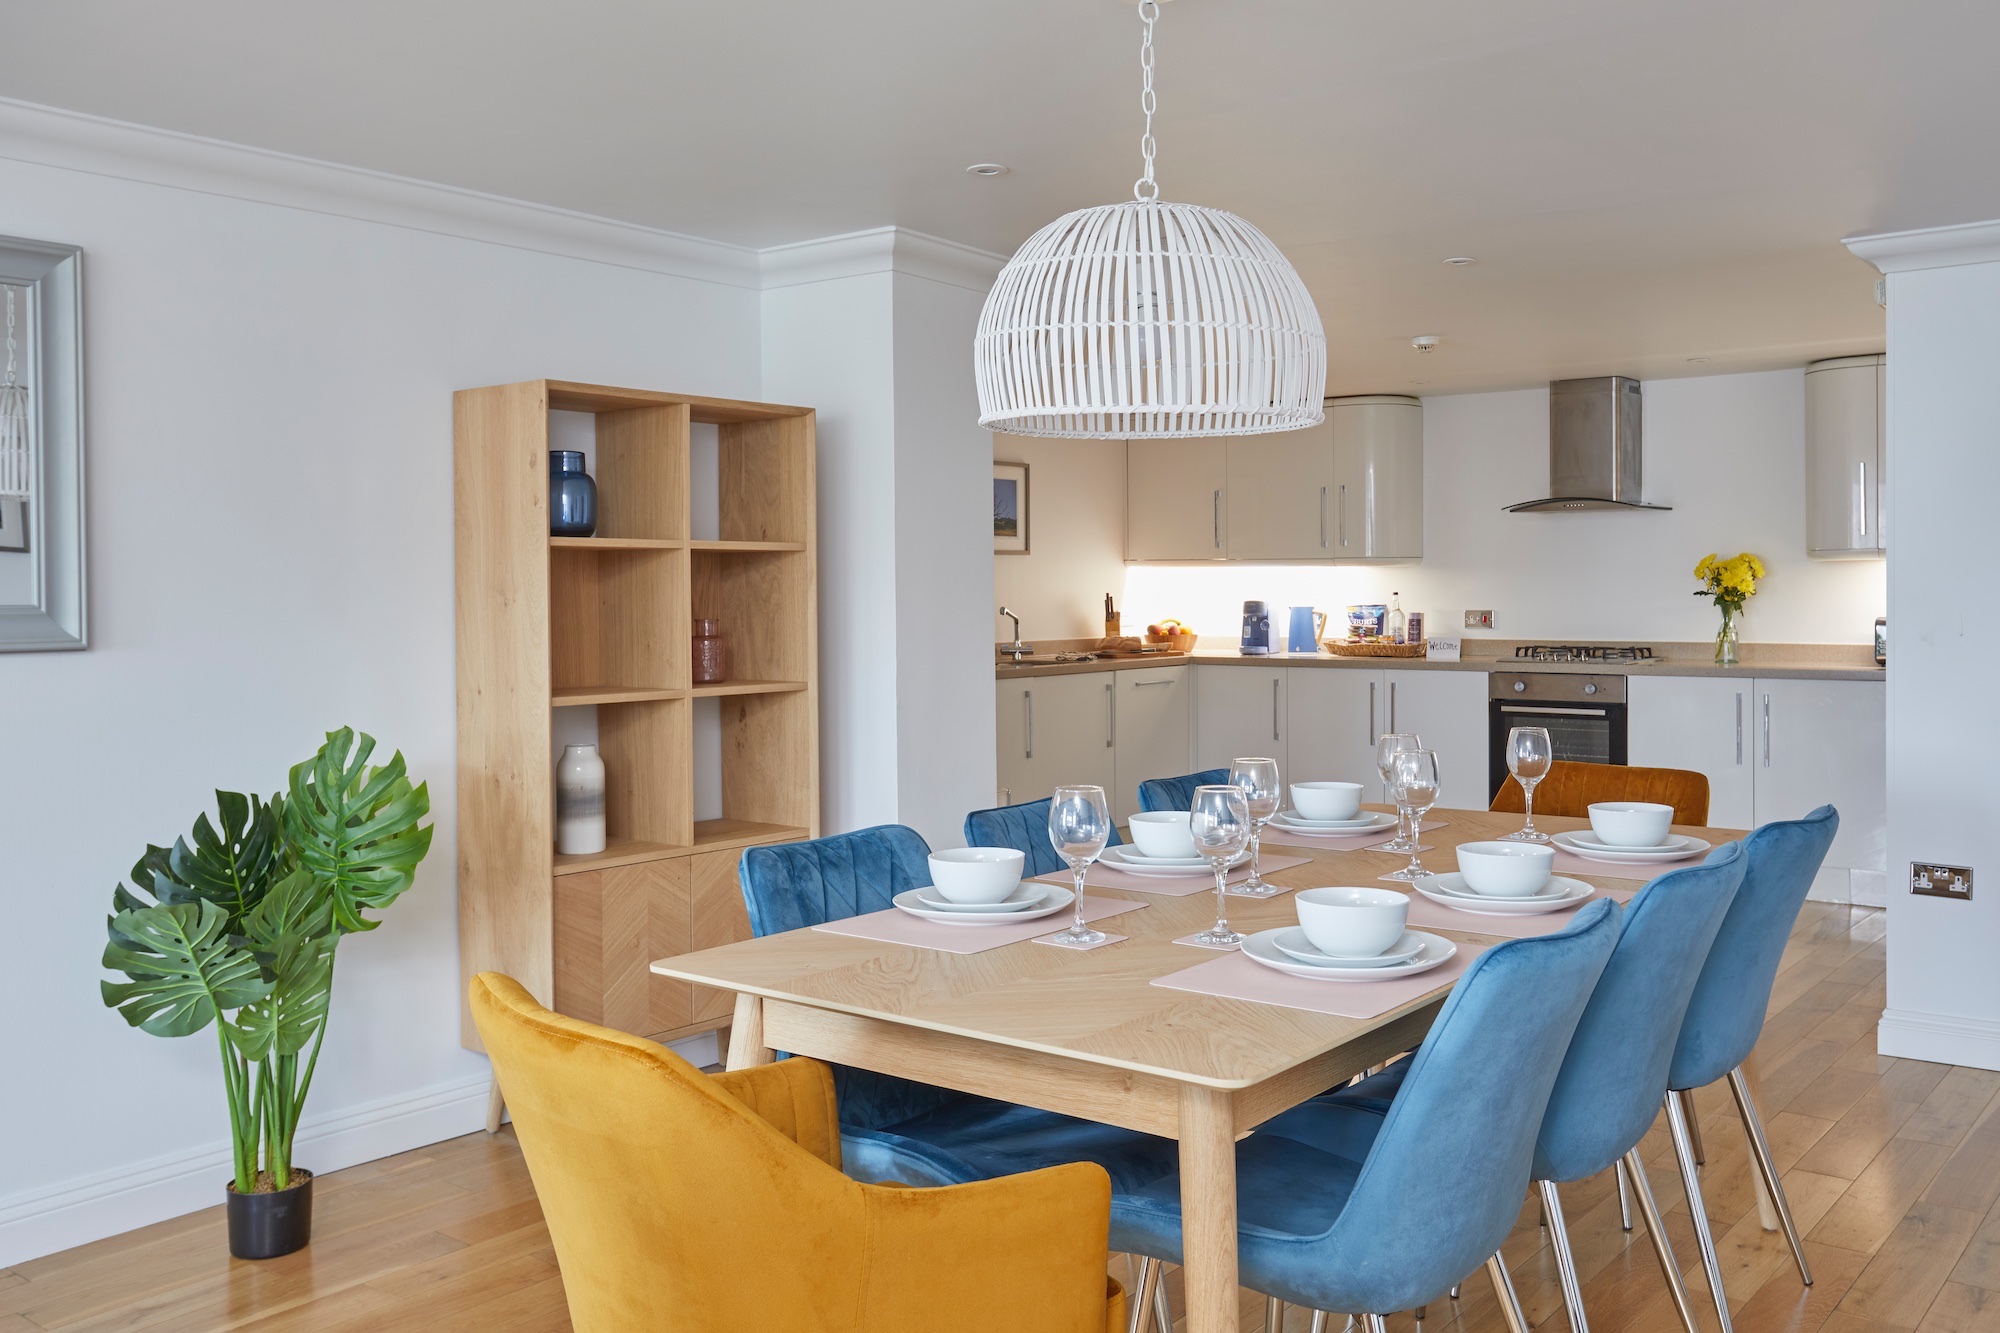 Dining Room and Kitchen, Mountbatten Garden Apartment, Shanklin Villa Aparthotel, Isle of Wight 2